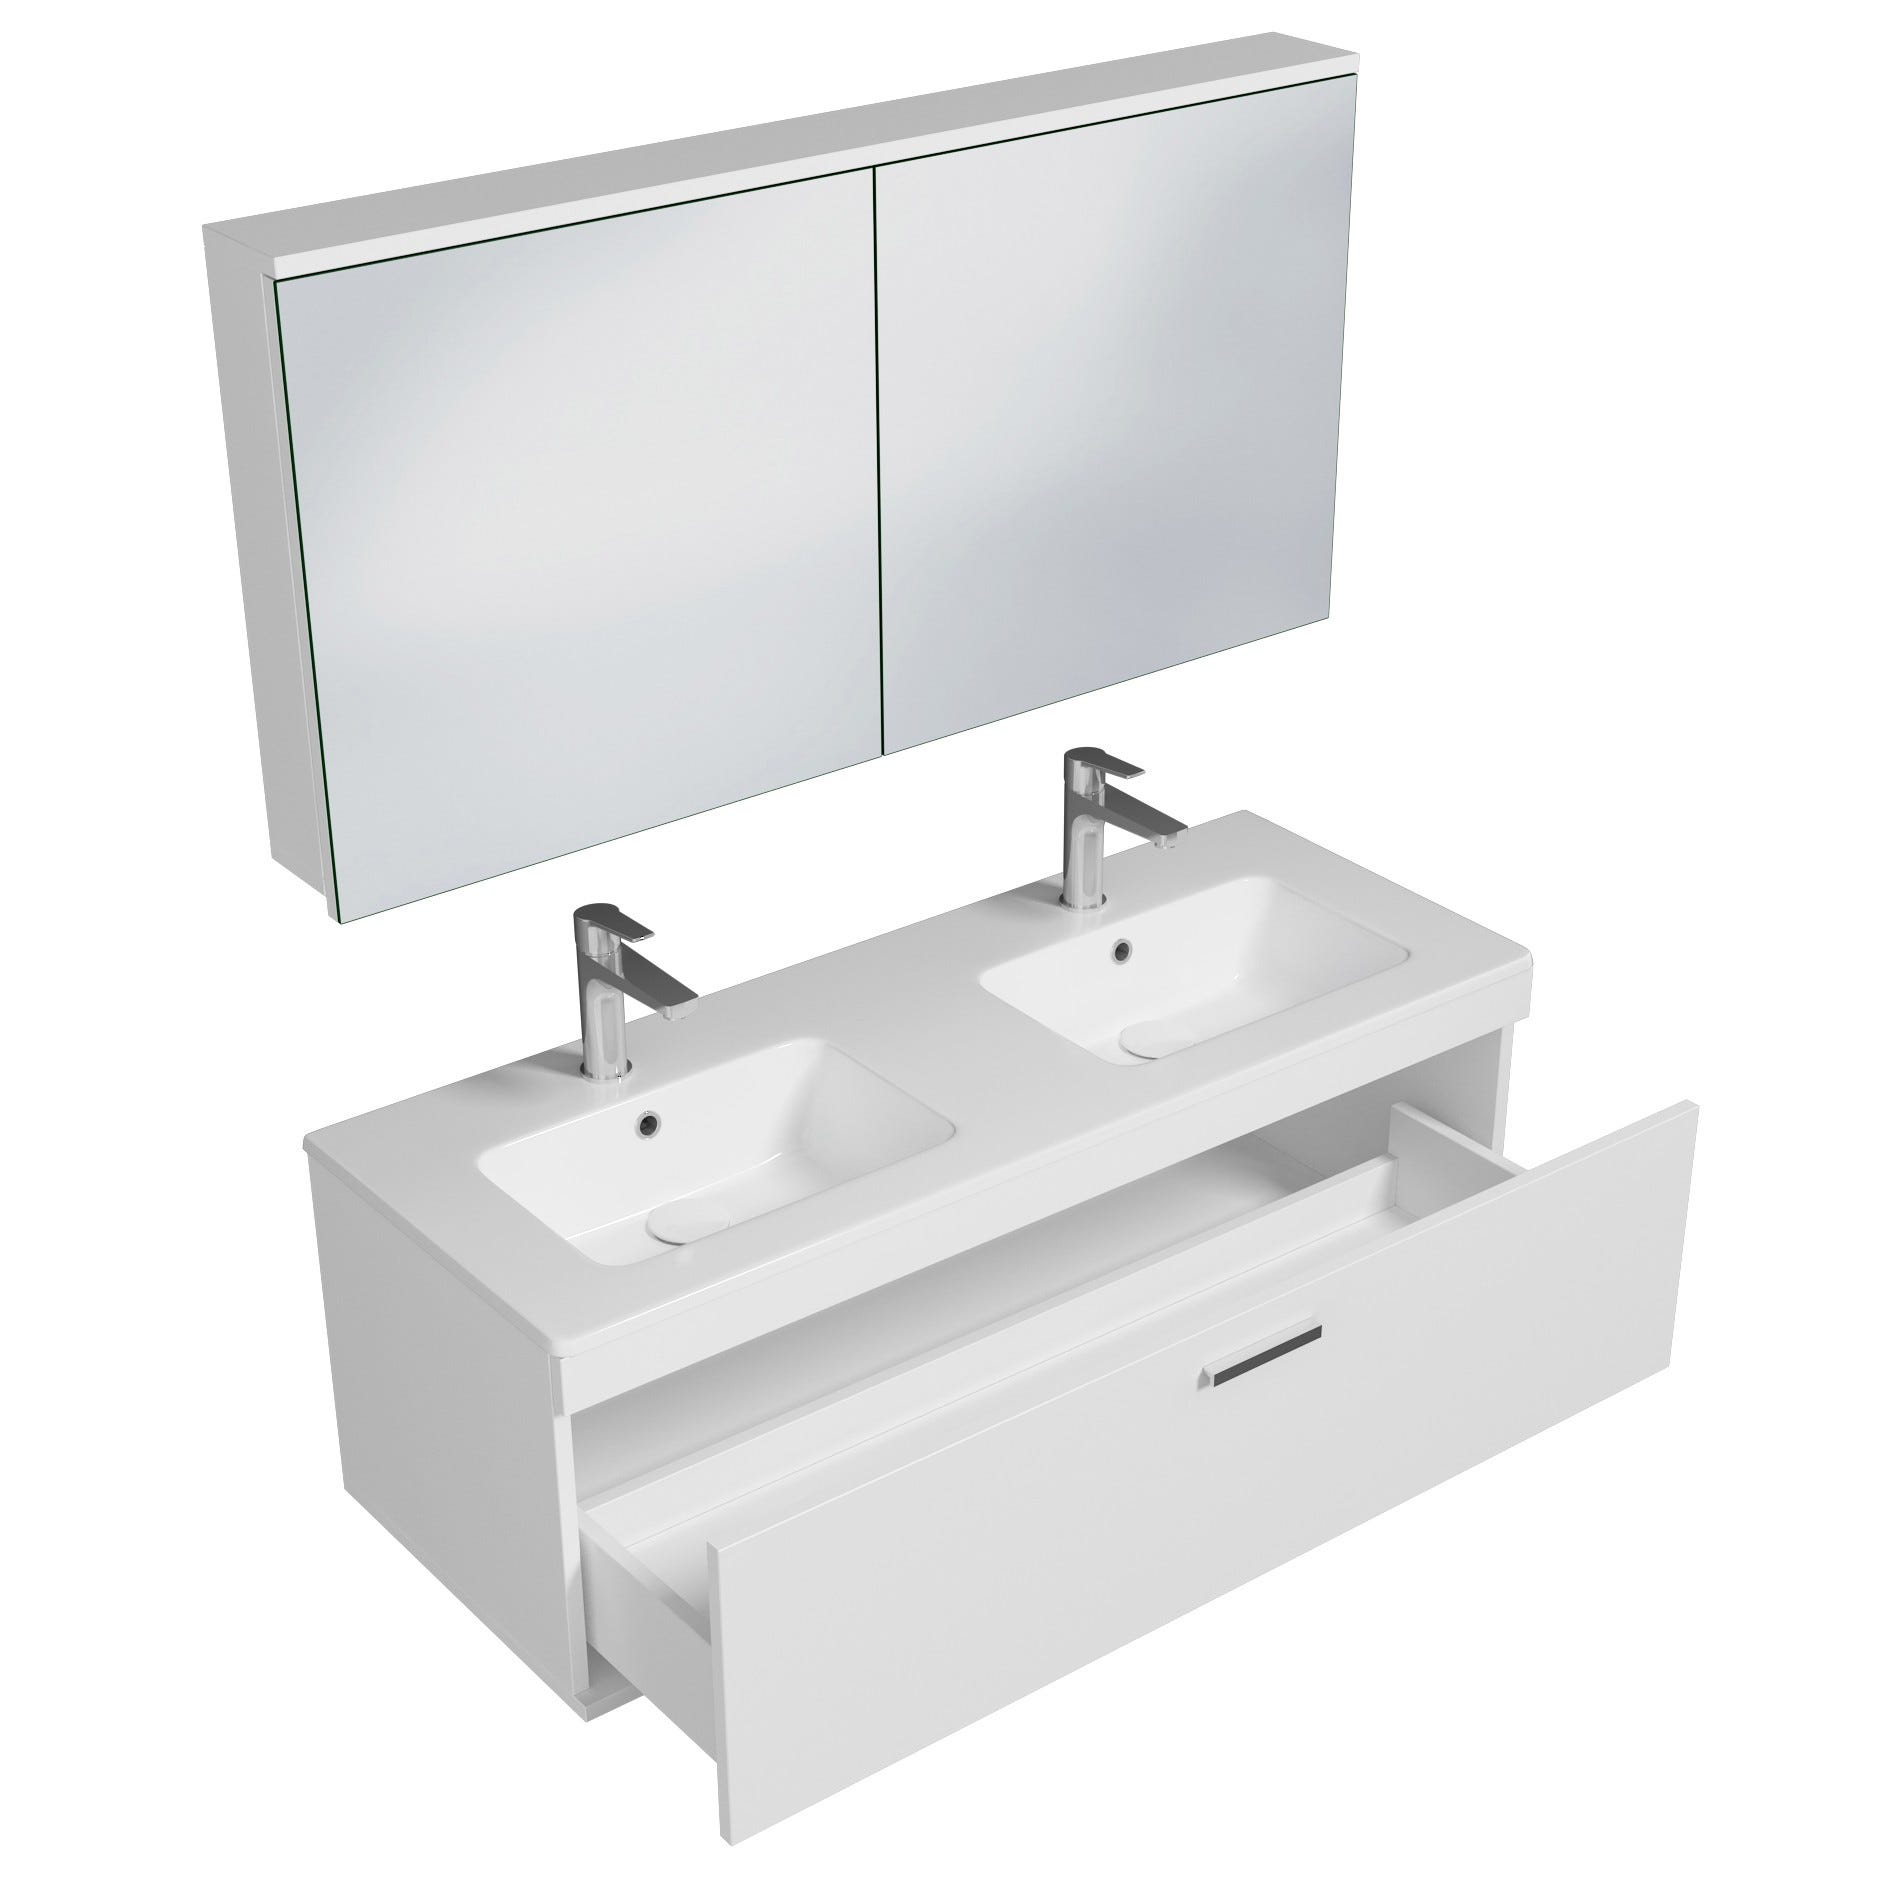 RUBITE Meuble salle de bain double vasque 1 tiroir blanc largeur 120 cm + miroir armoire 1